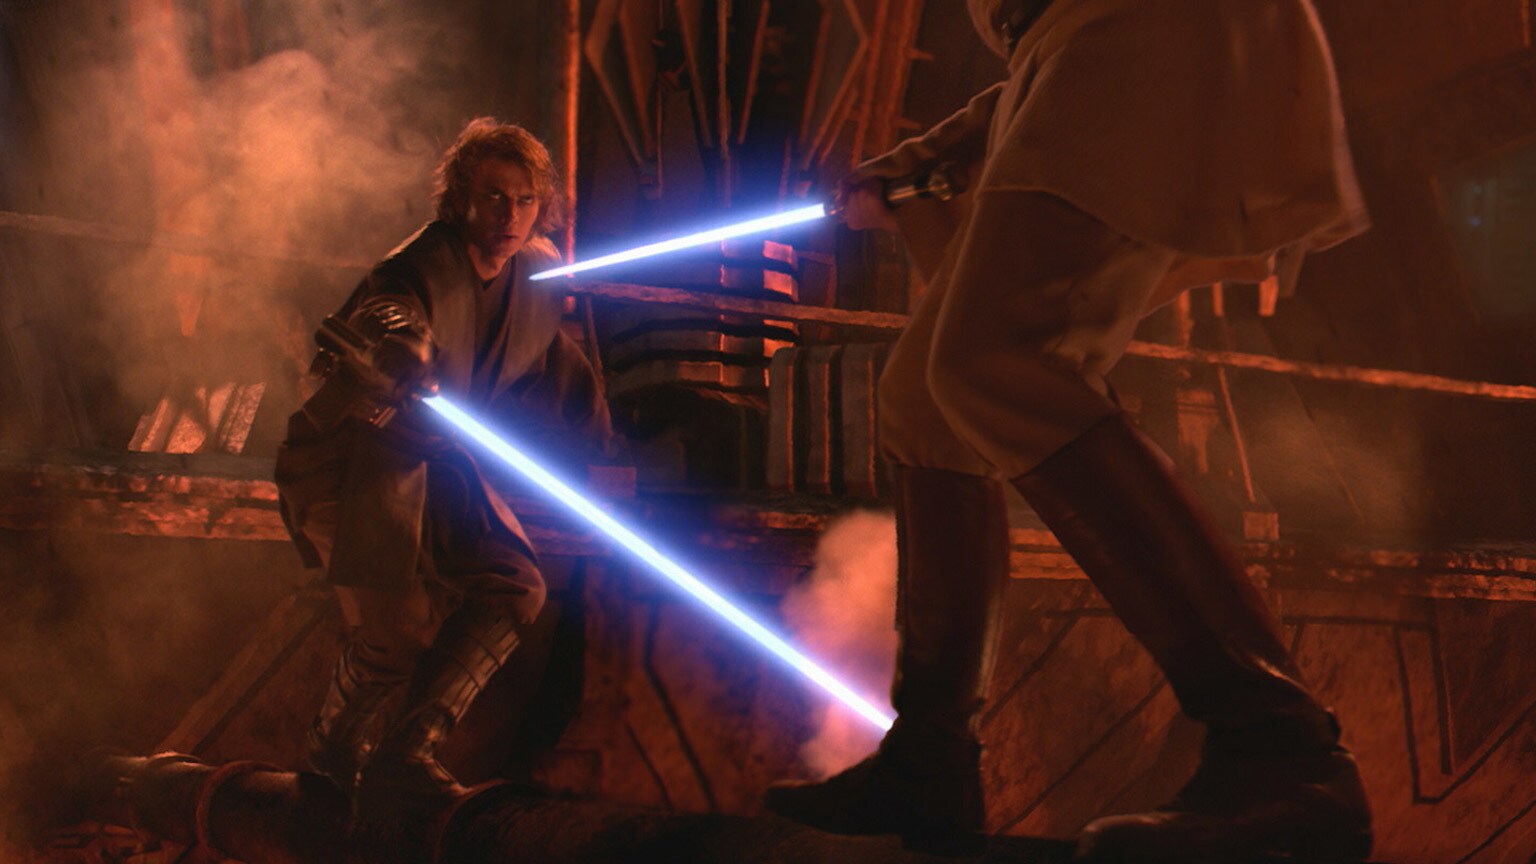 ObiWan Kenobi VS Anakin Skywalker by Fakemophead